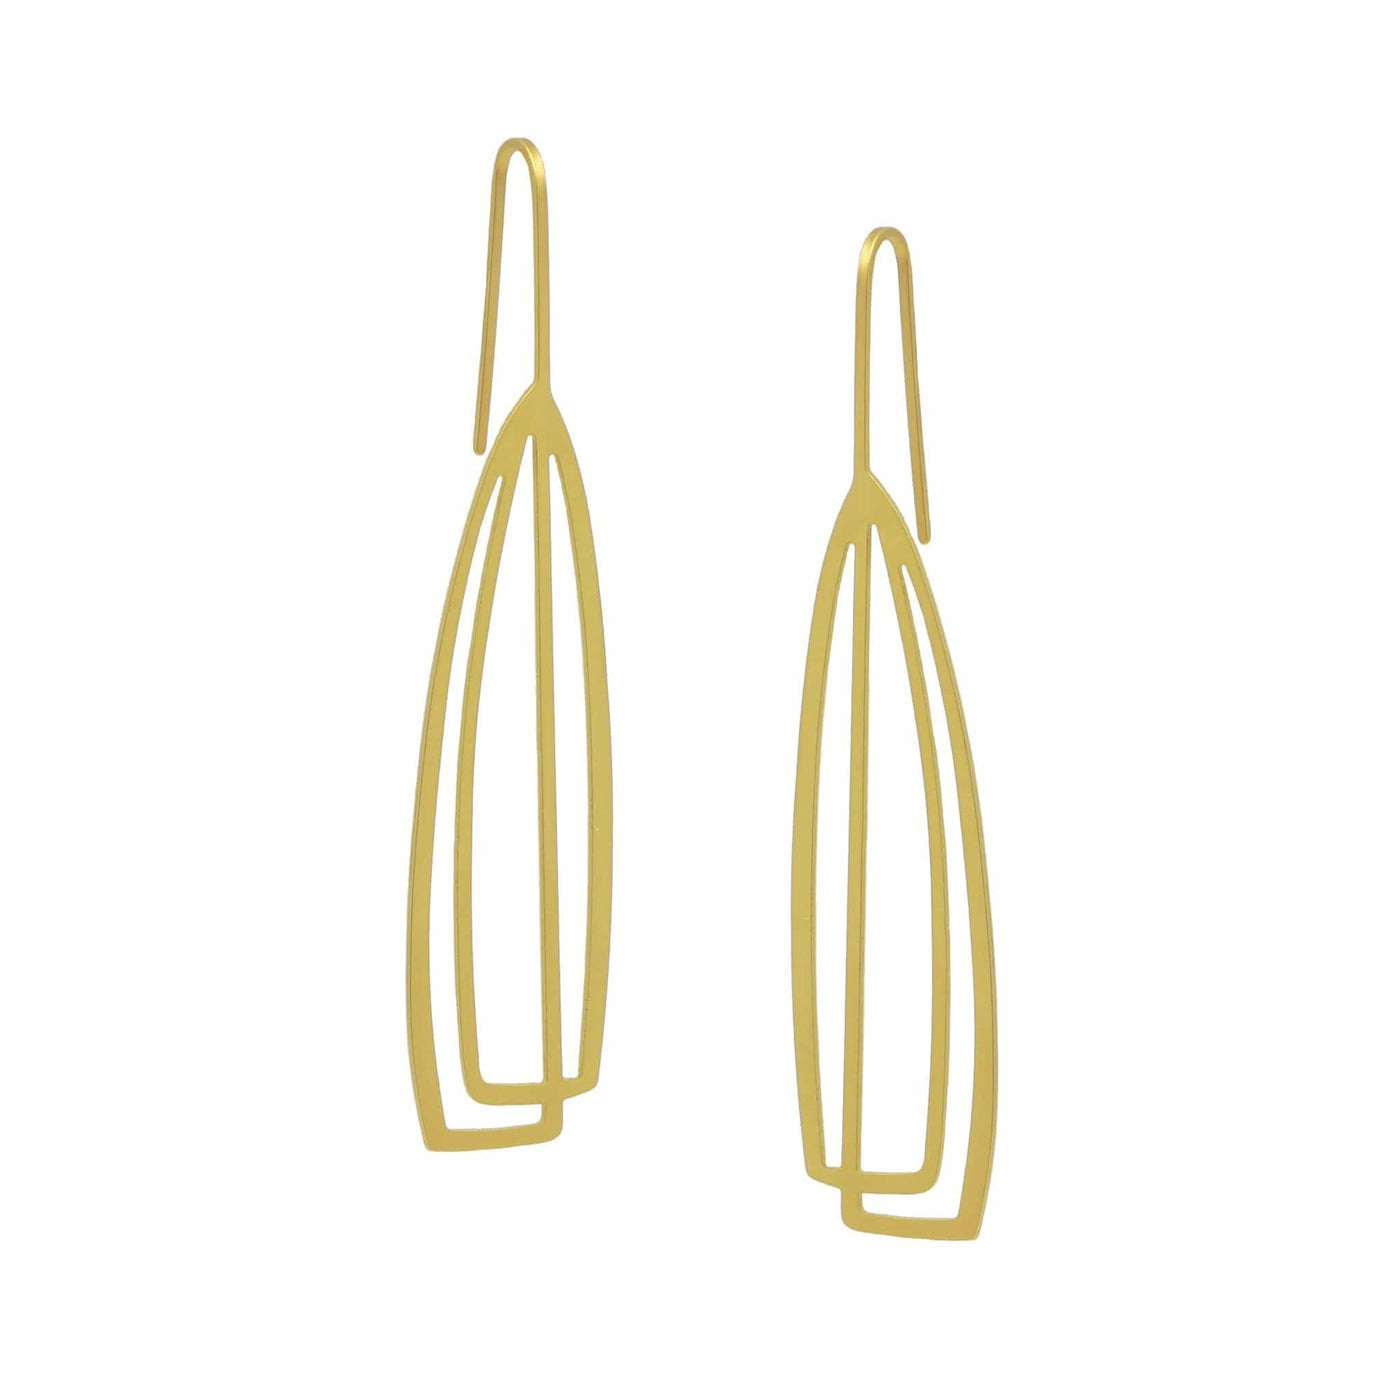 Arch Earrings - 22ct Matt Gold Plate - inSync design